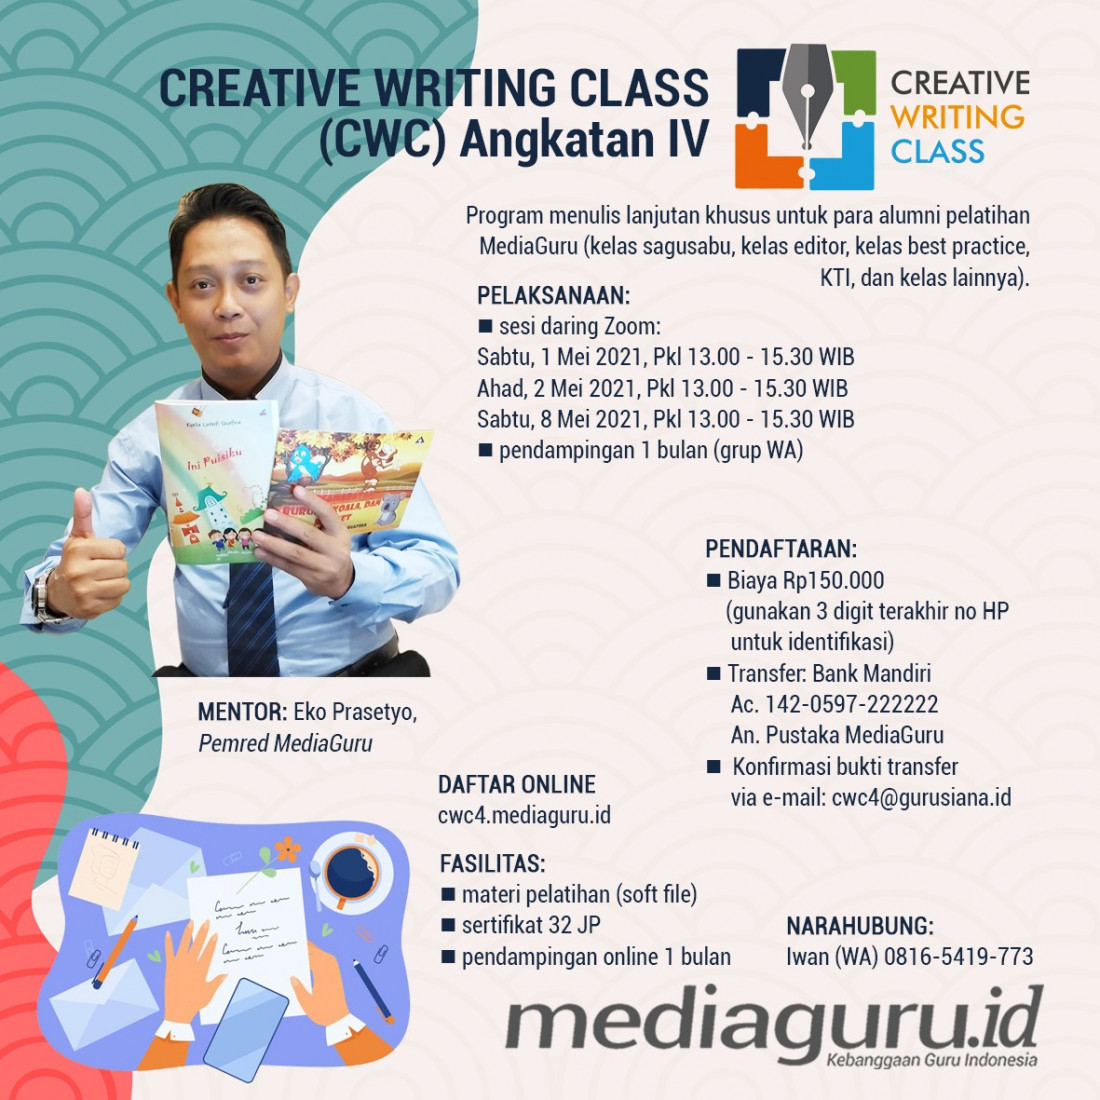 CREATIVE WRITING CLASS (CWC) IV MEDIAGURU (1 - 8 MEI 2021)